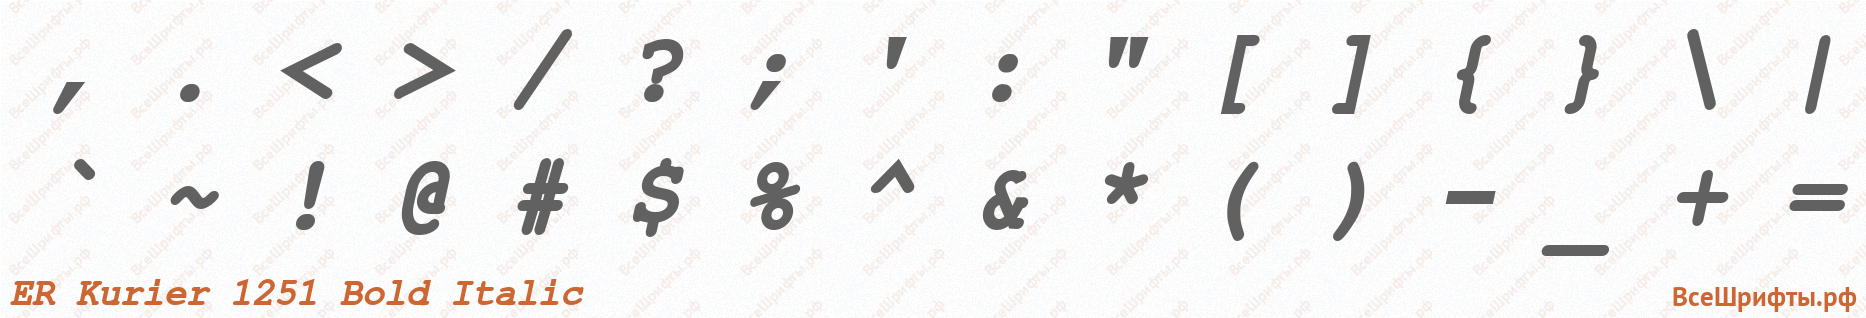 Шрифт ER Kurier 1251 Bold Italic со знаками препинания и пунктуации